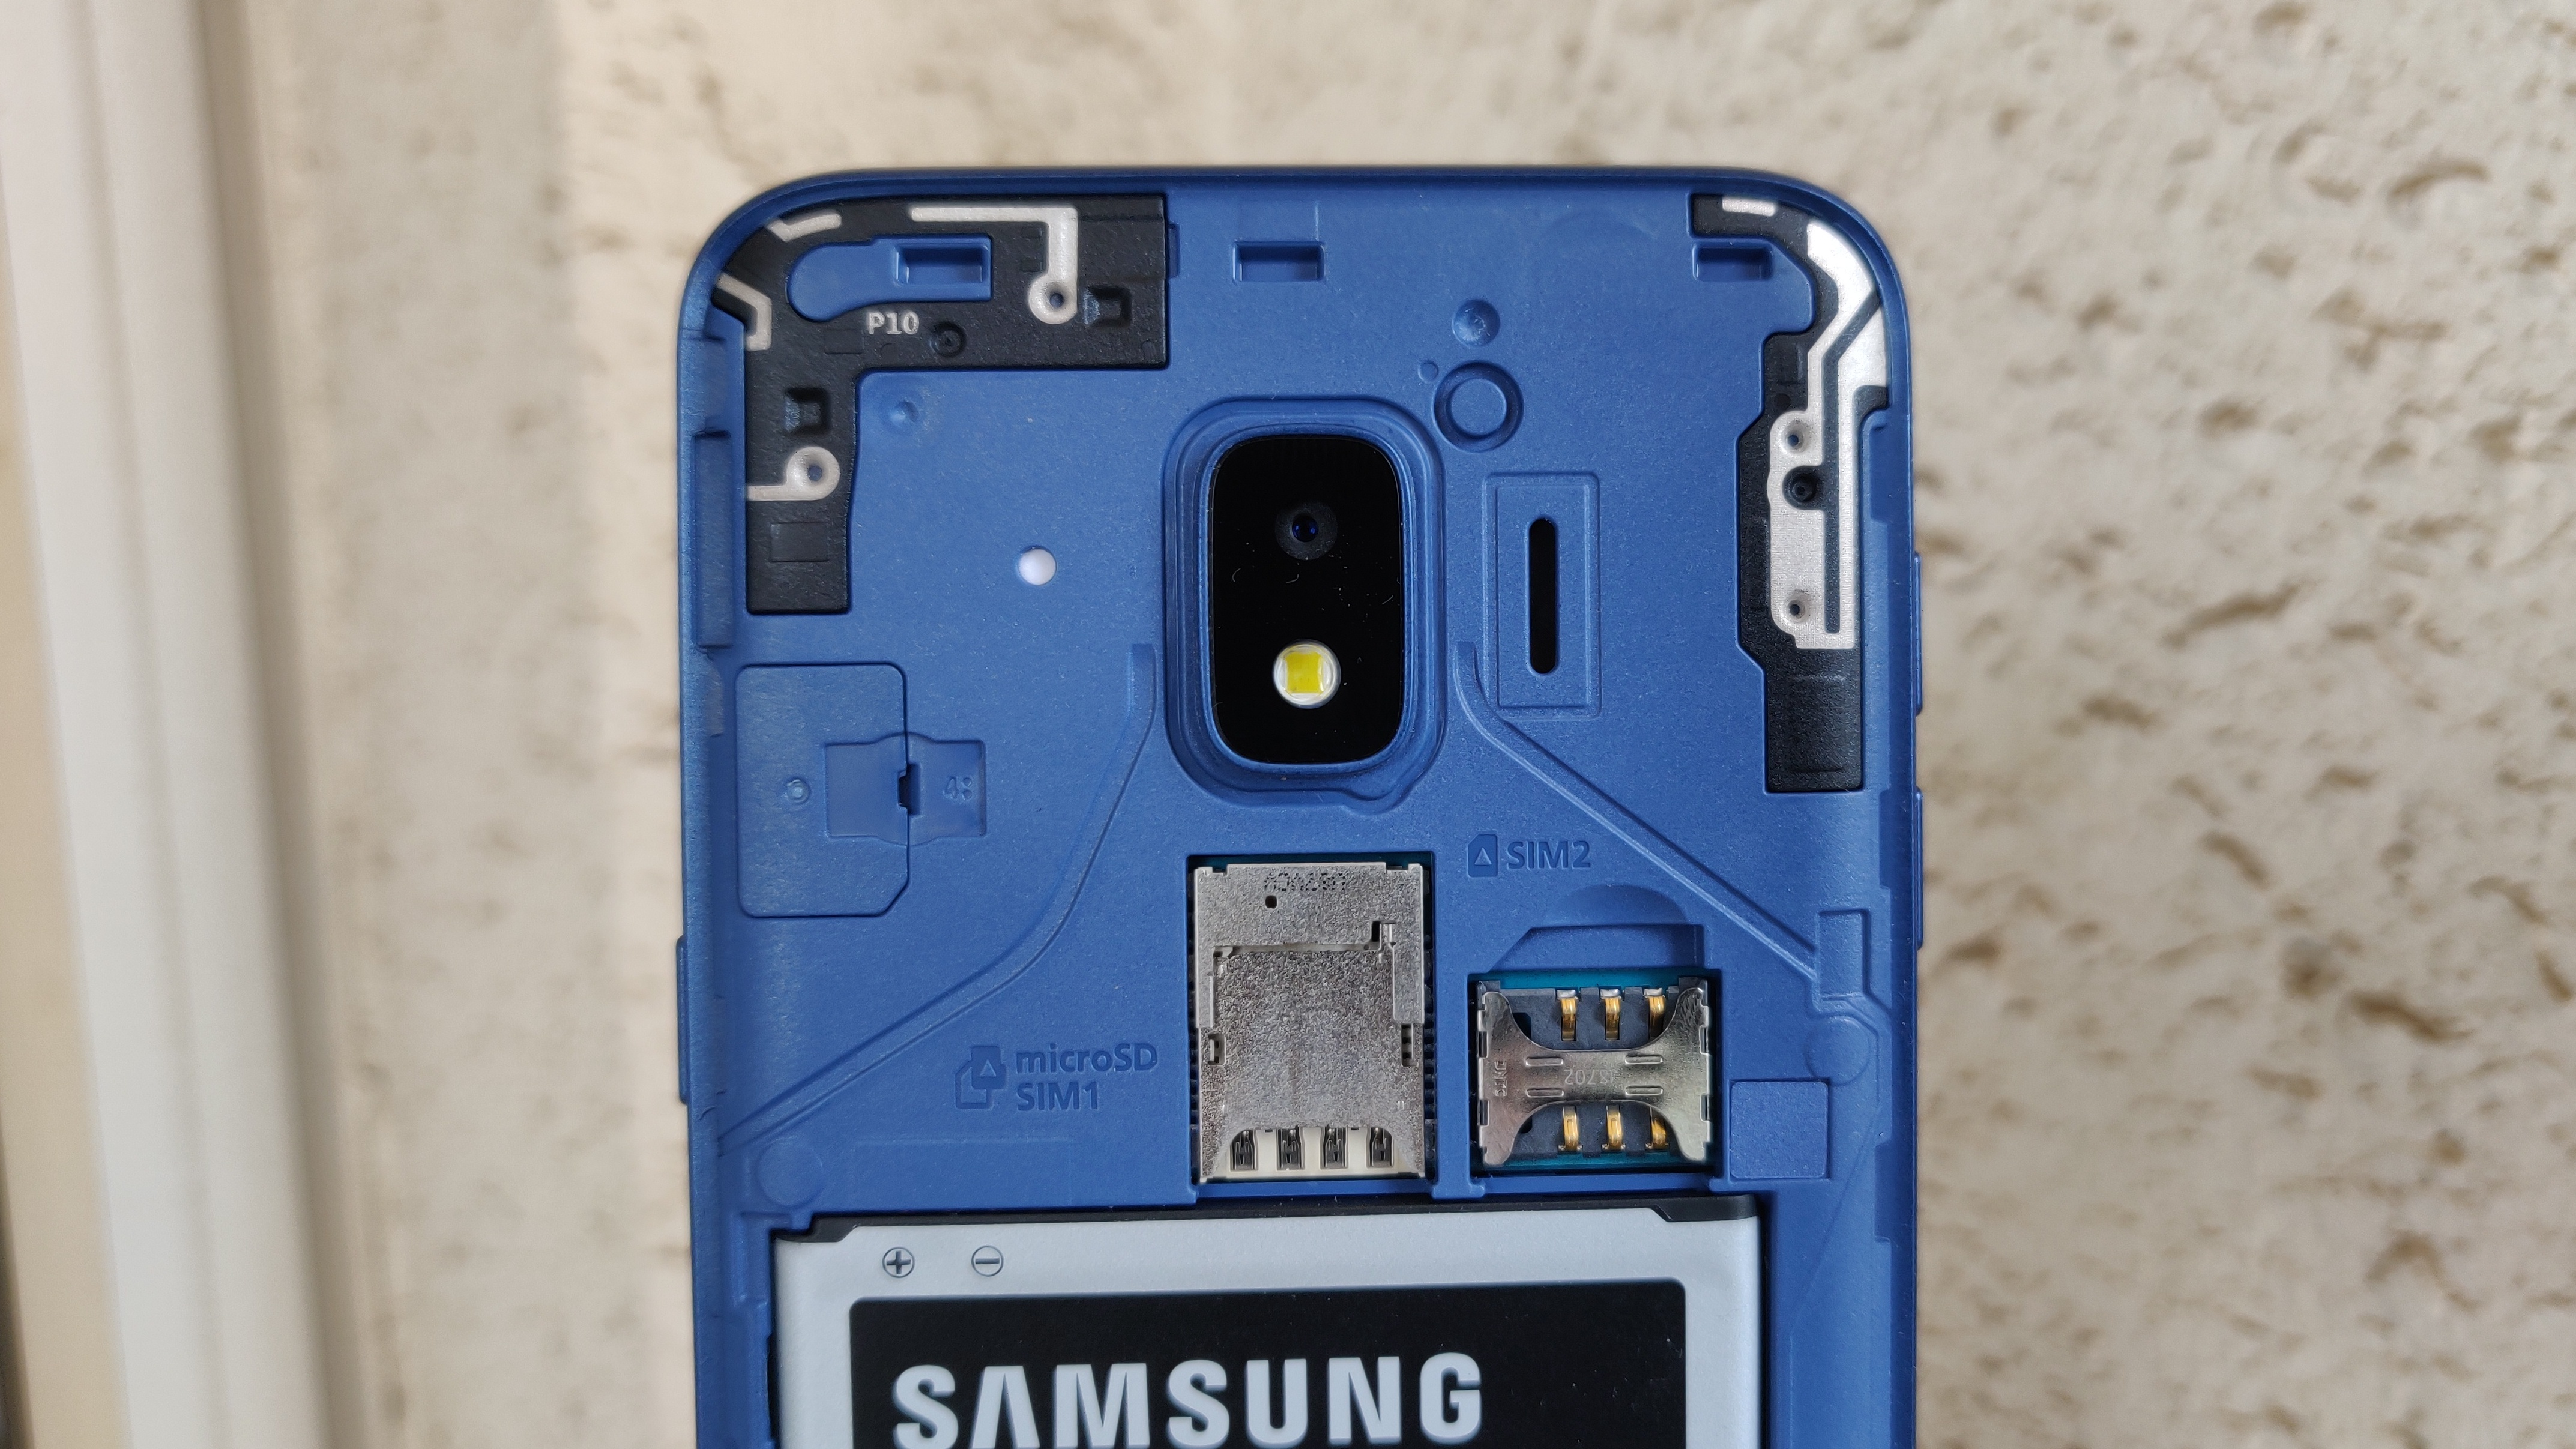 Samsung 4g 2 Sim